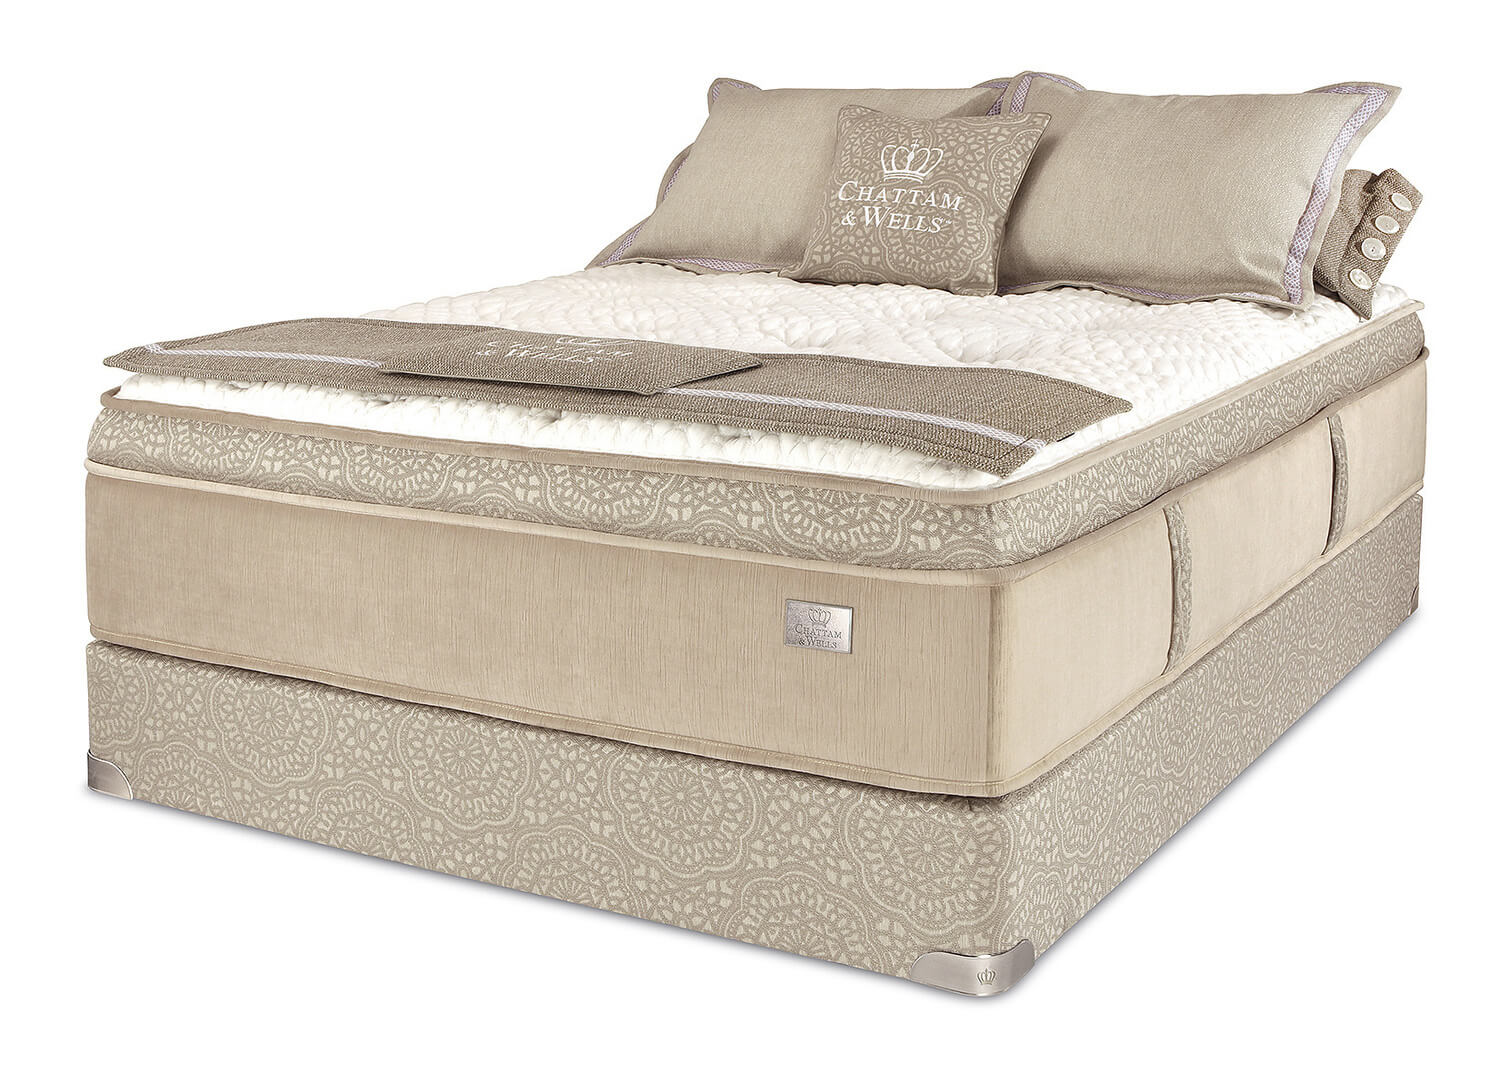 chattam and wells olivia plush pillow top mattress